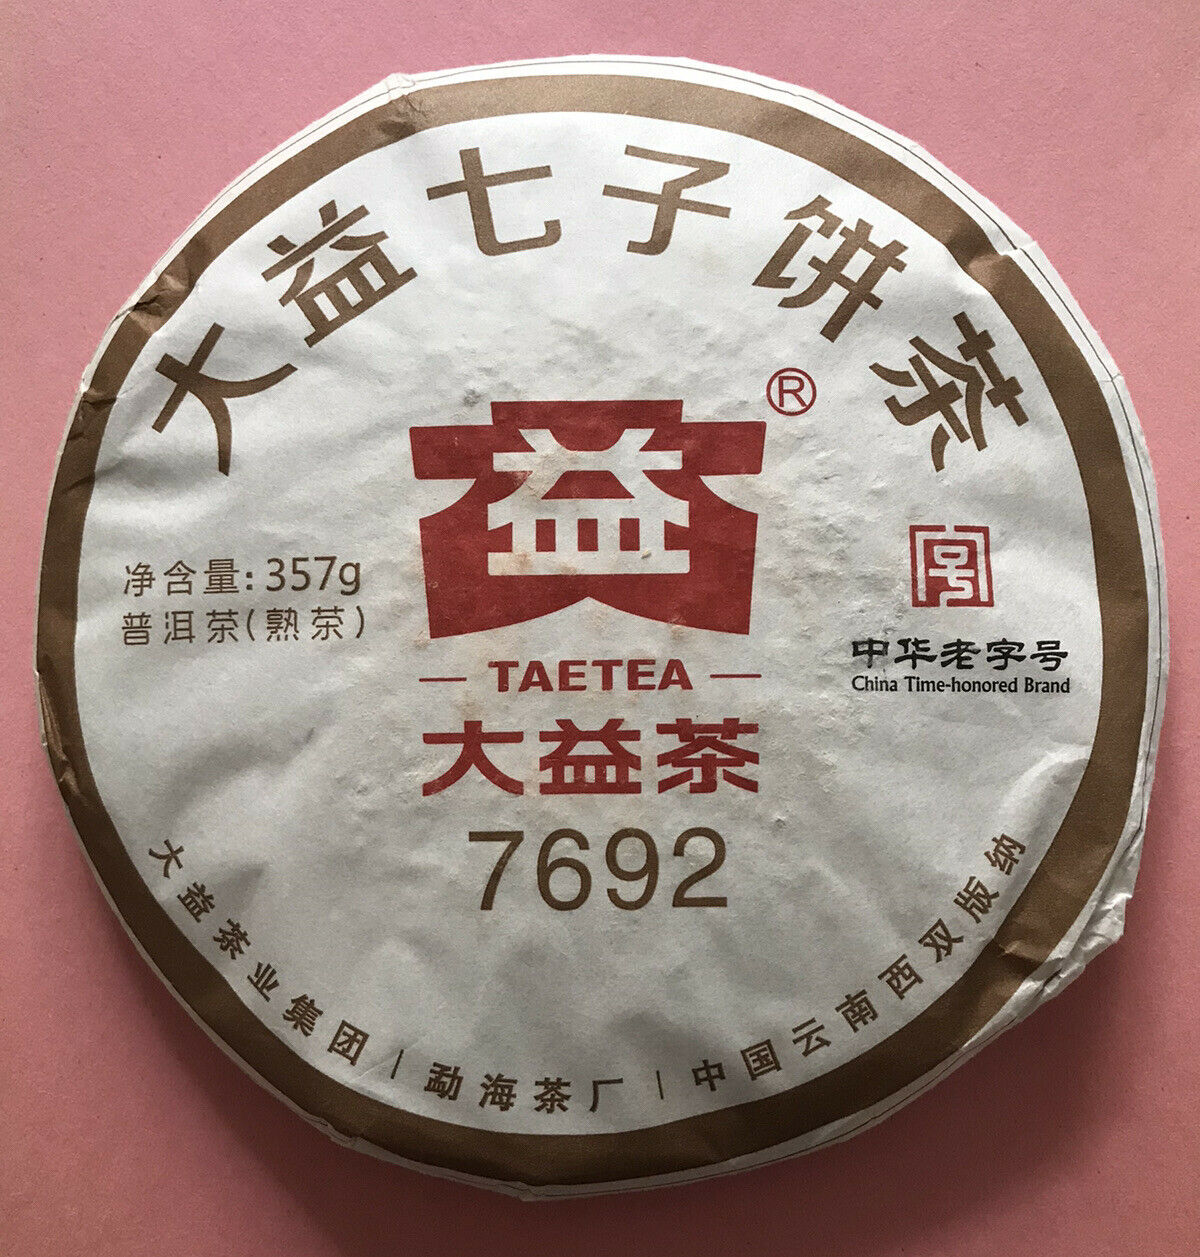 2018 TAETEA Dayi Menghai Yunnan Ripe Puerh Tea Recipe 7692 Puer Tea 357g 大益茶